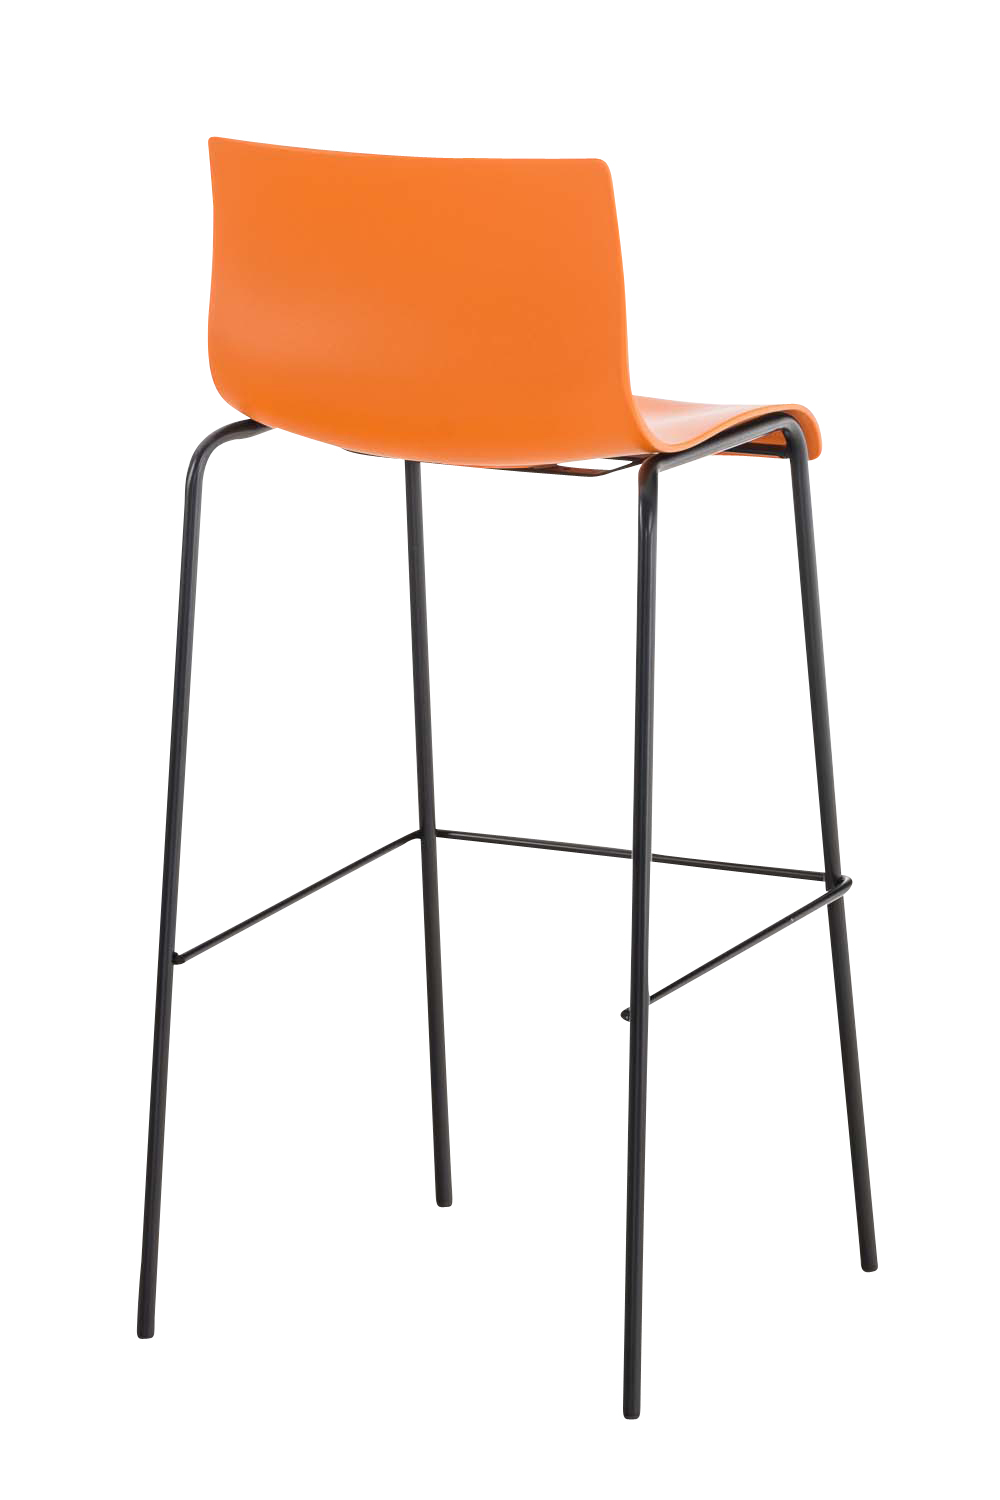 Barhocker Hoover Kunststoff 4-Fuß Gestell orange schwarz